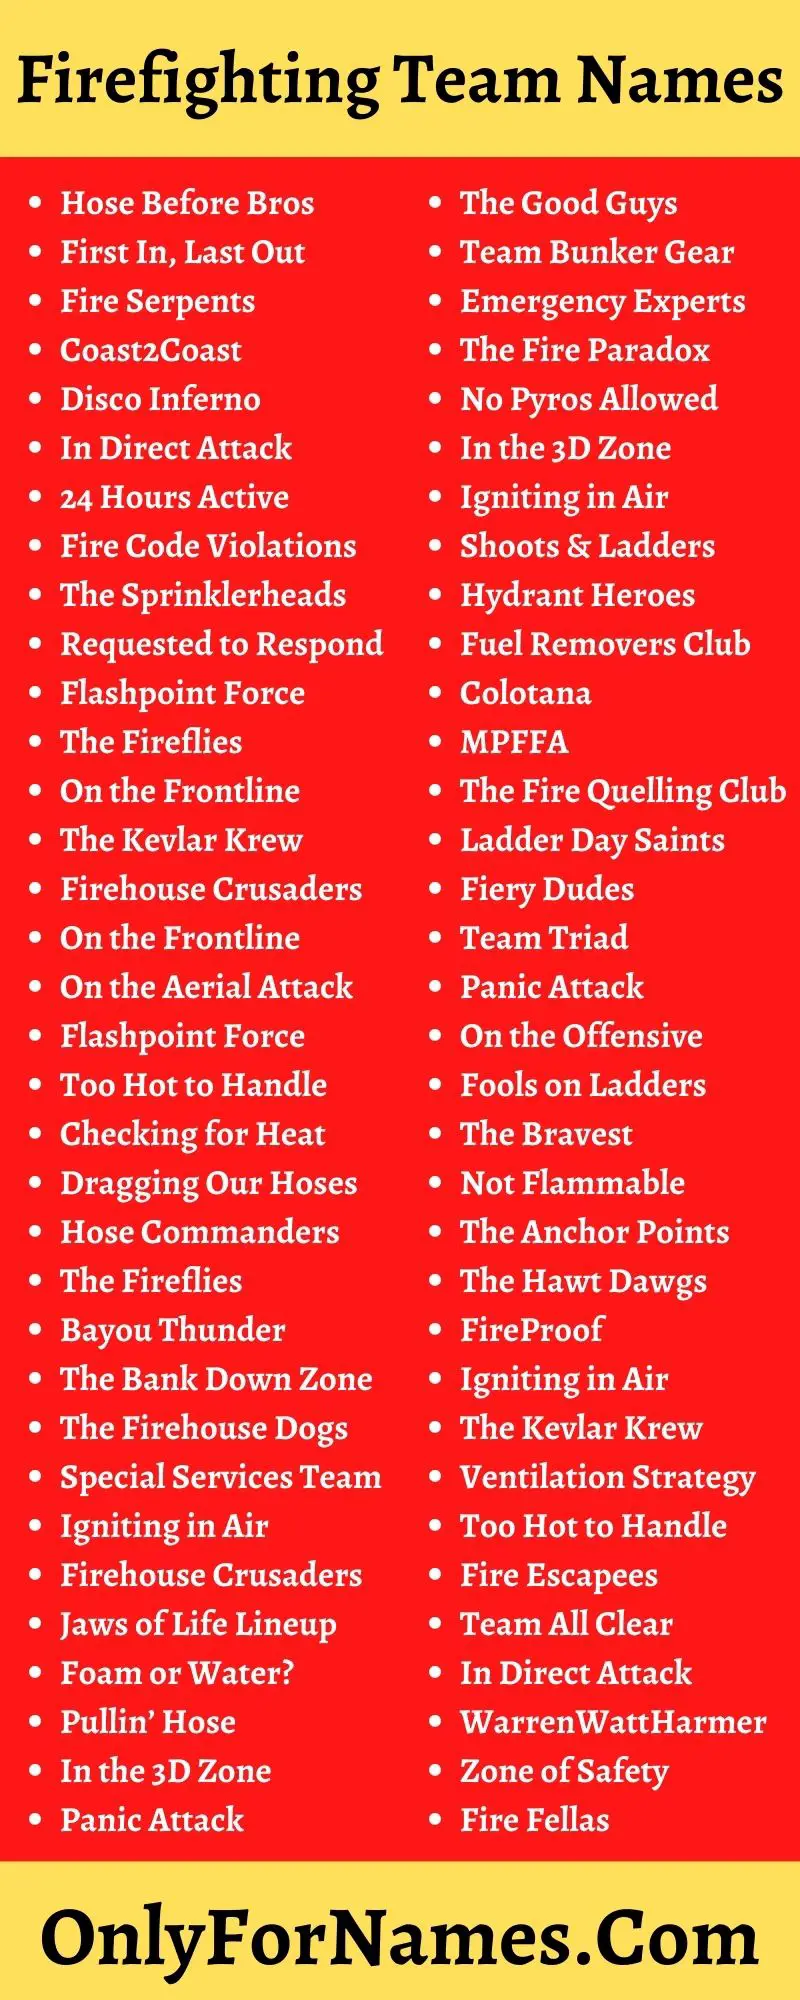 Firefighting Team Names